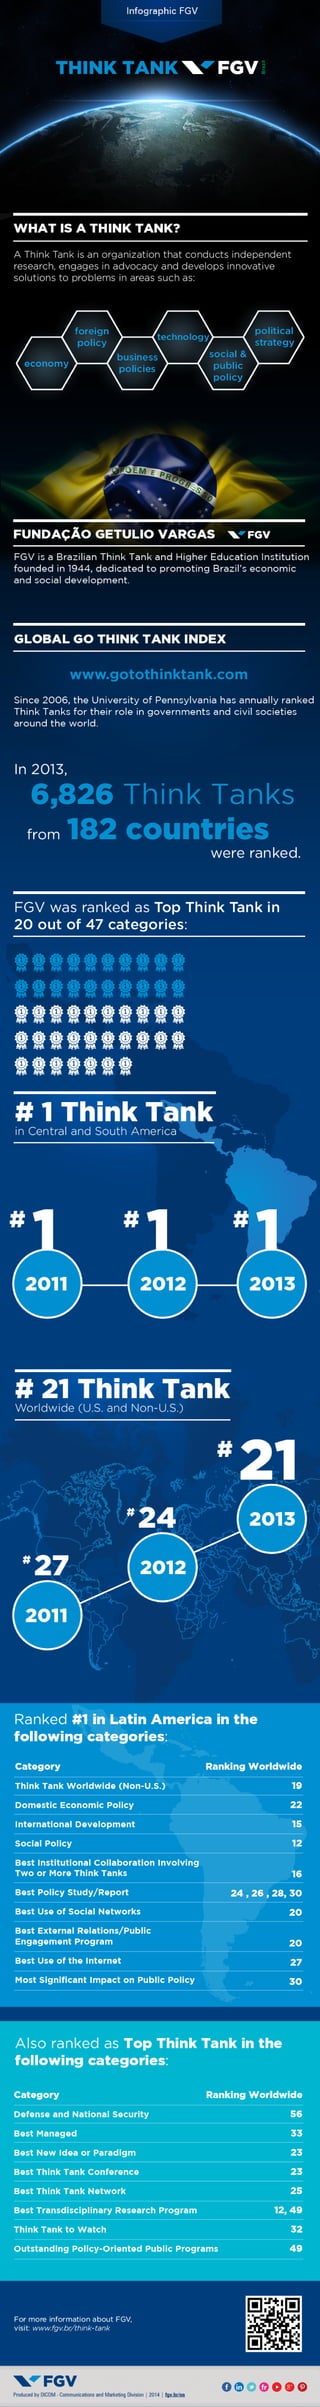 Go To Think Tank Ranking 2013